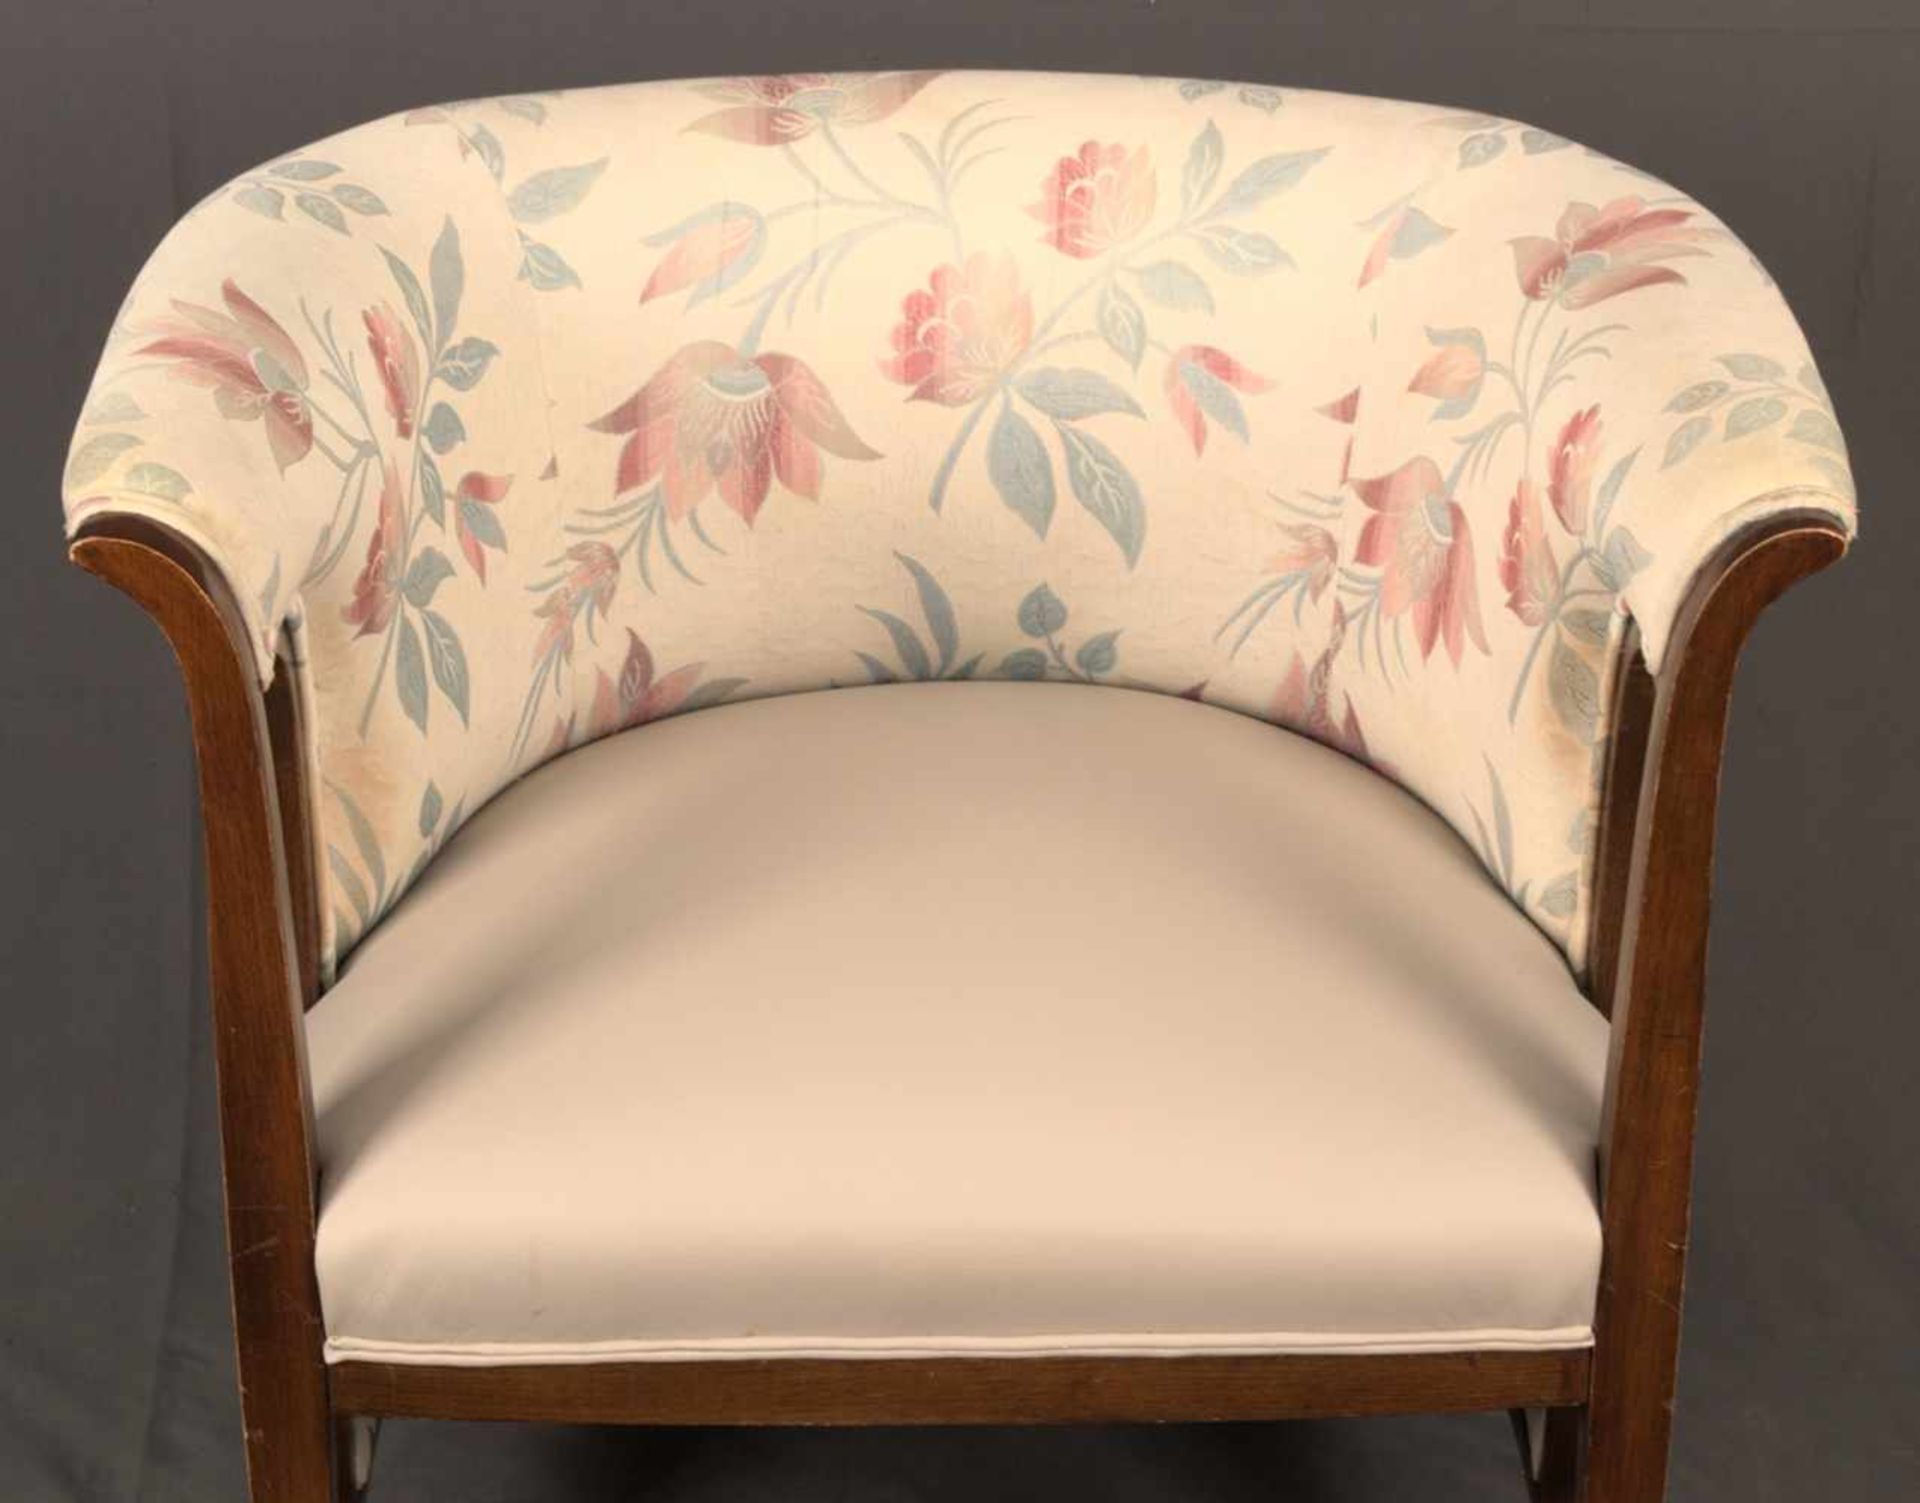 Wiener Polstersessel, hufeisenförmiges, gepolstertes Sesselgestell mit geraden, knatigen Beinen (die - Image 19 of 19